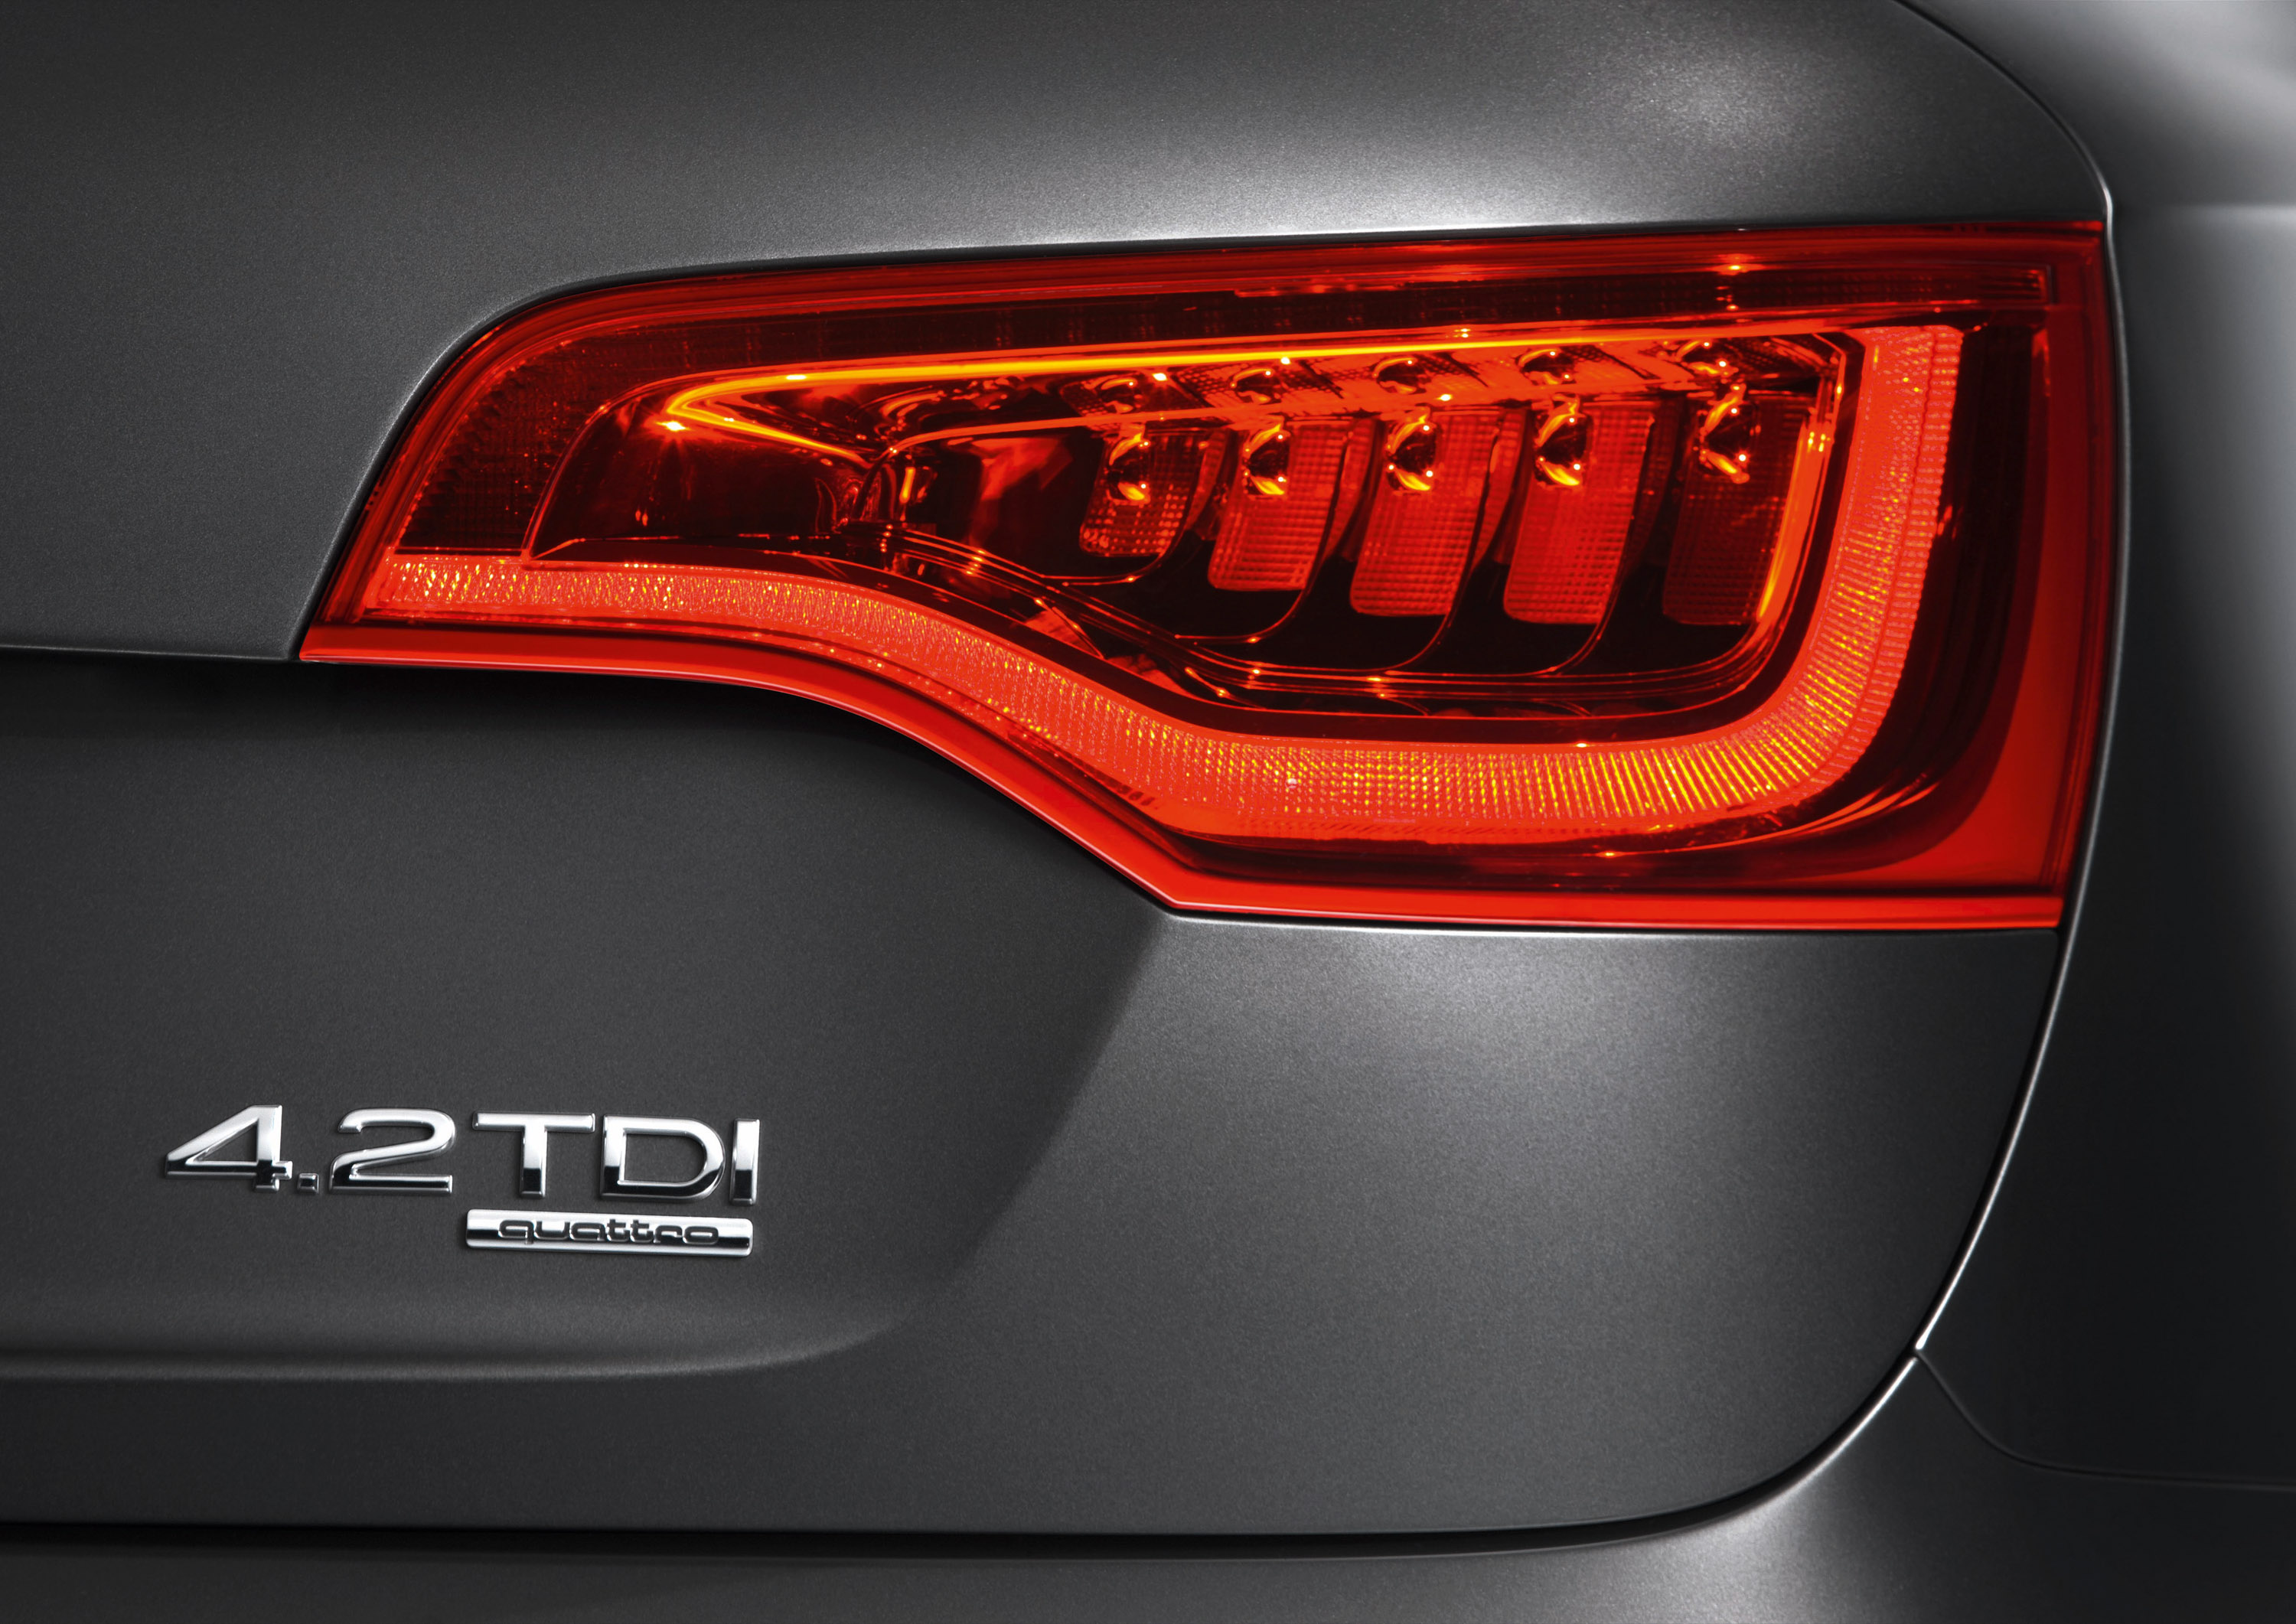 Audi Q7 4.2 TDI